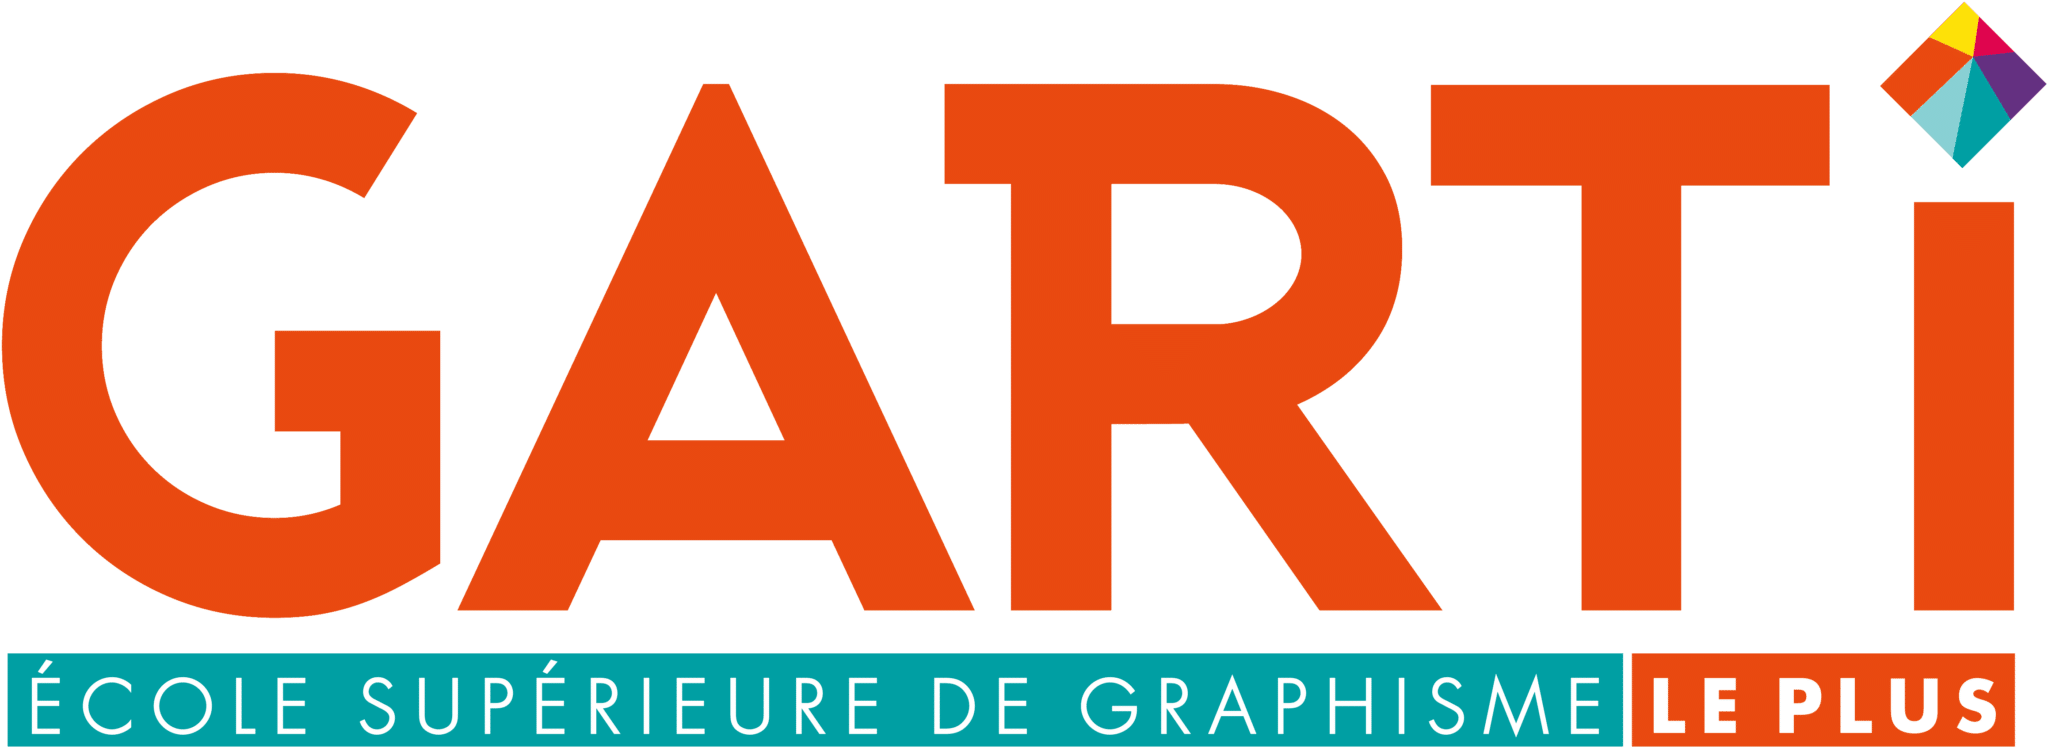 Ecole de graphisme Garti - Logo